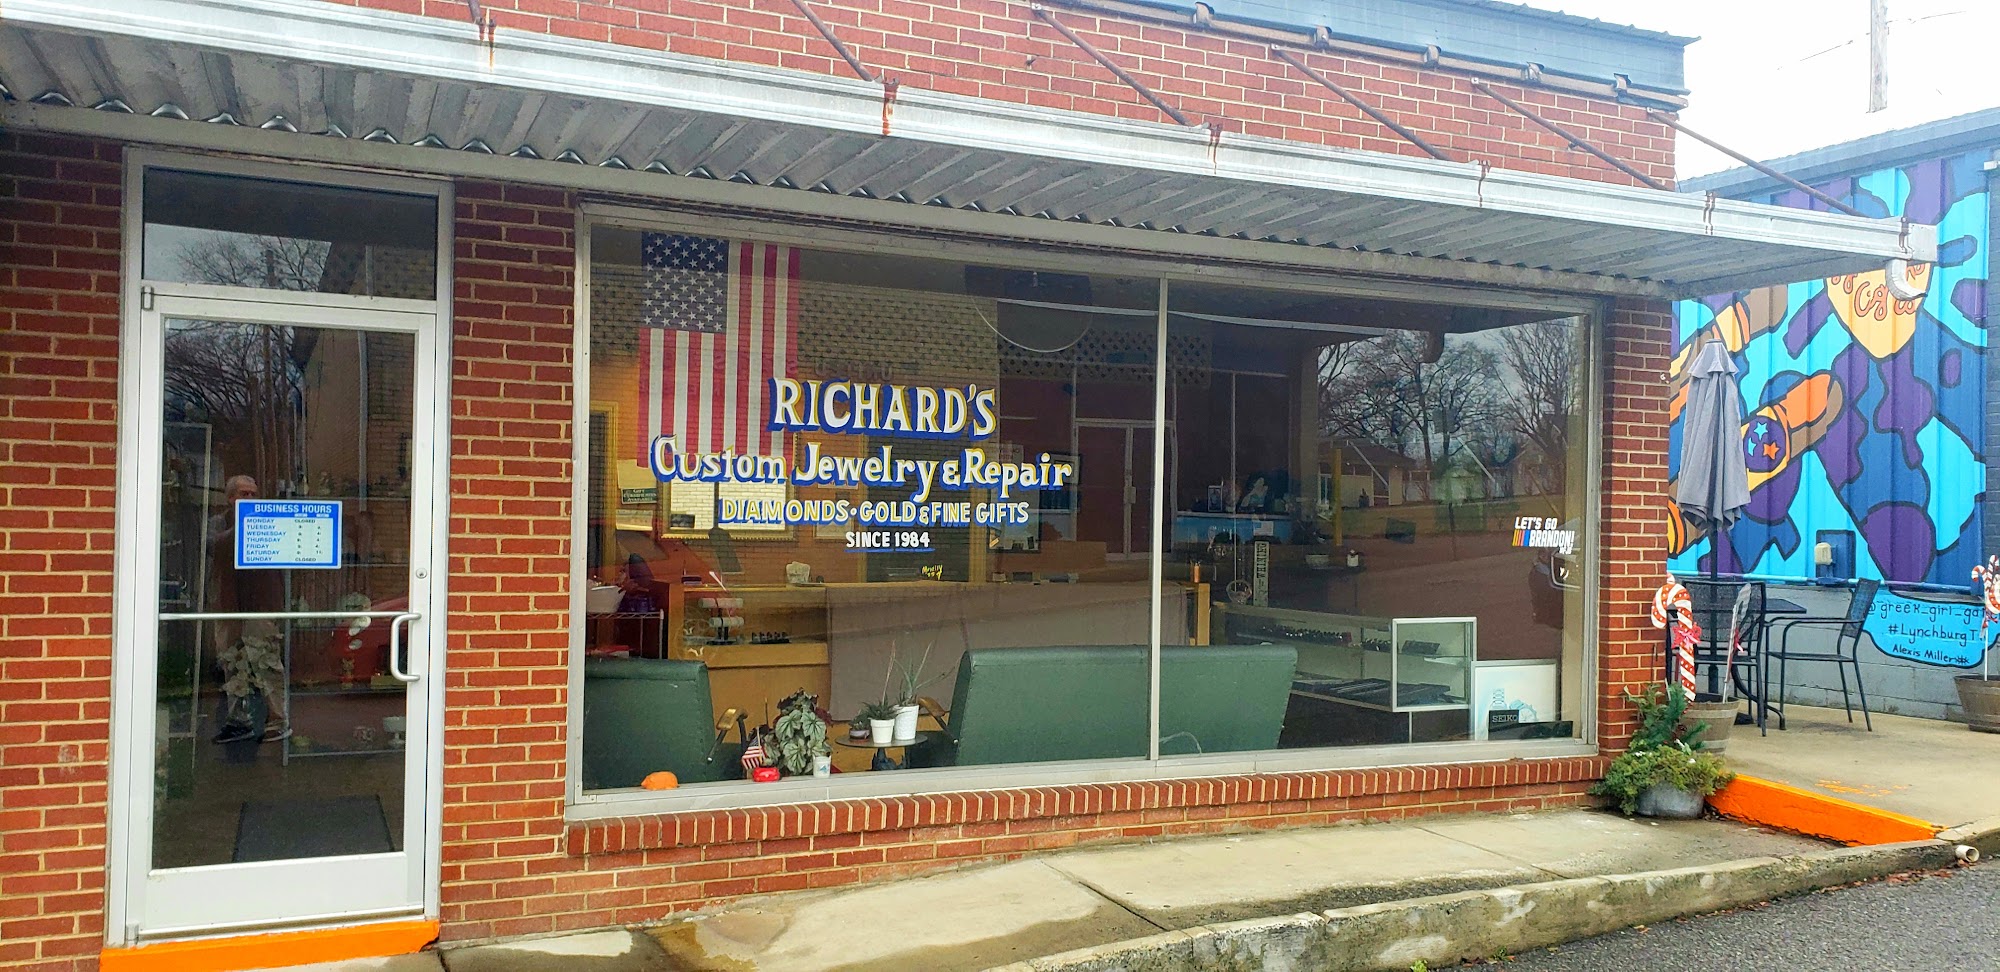 Richard's Jewelry Repair 16 Hiles St, Lynchburg Tennessee 37352